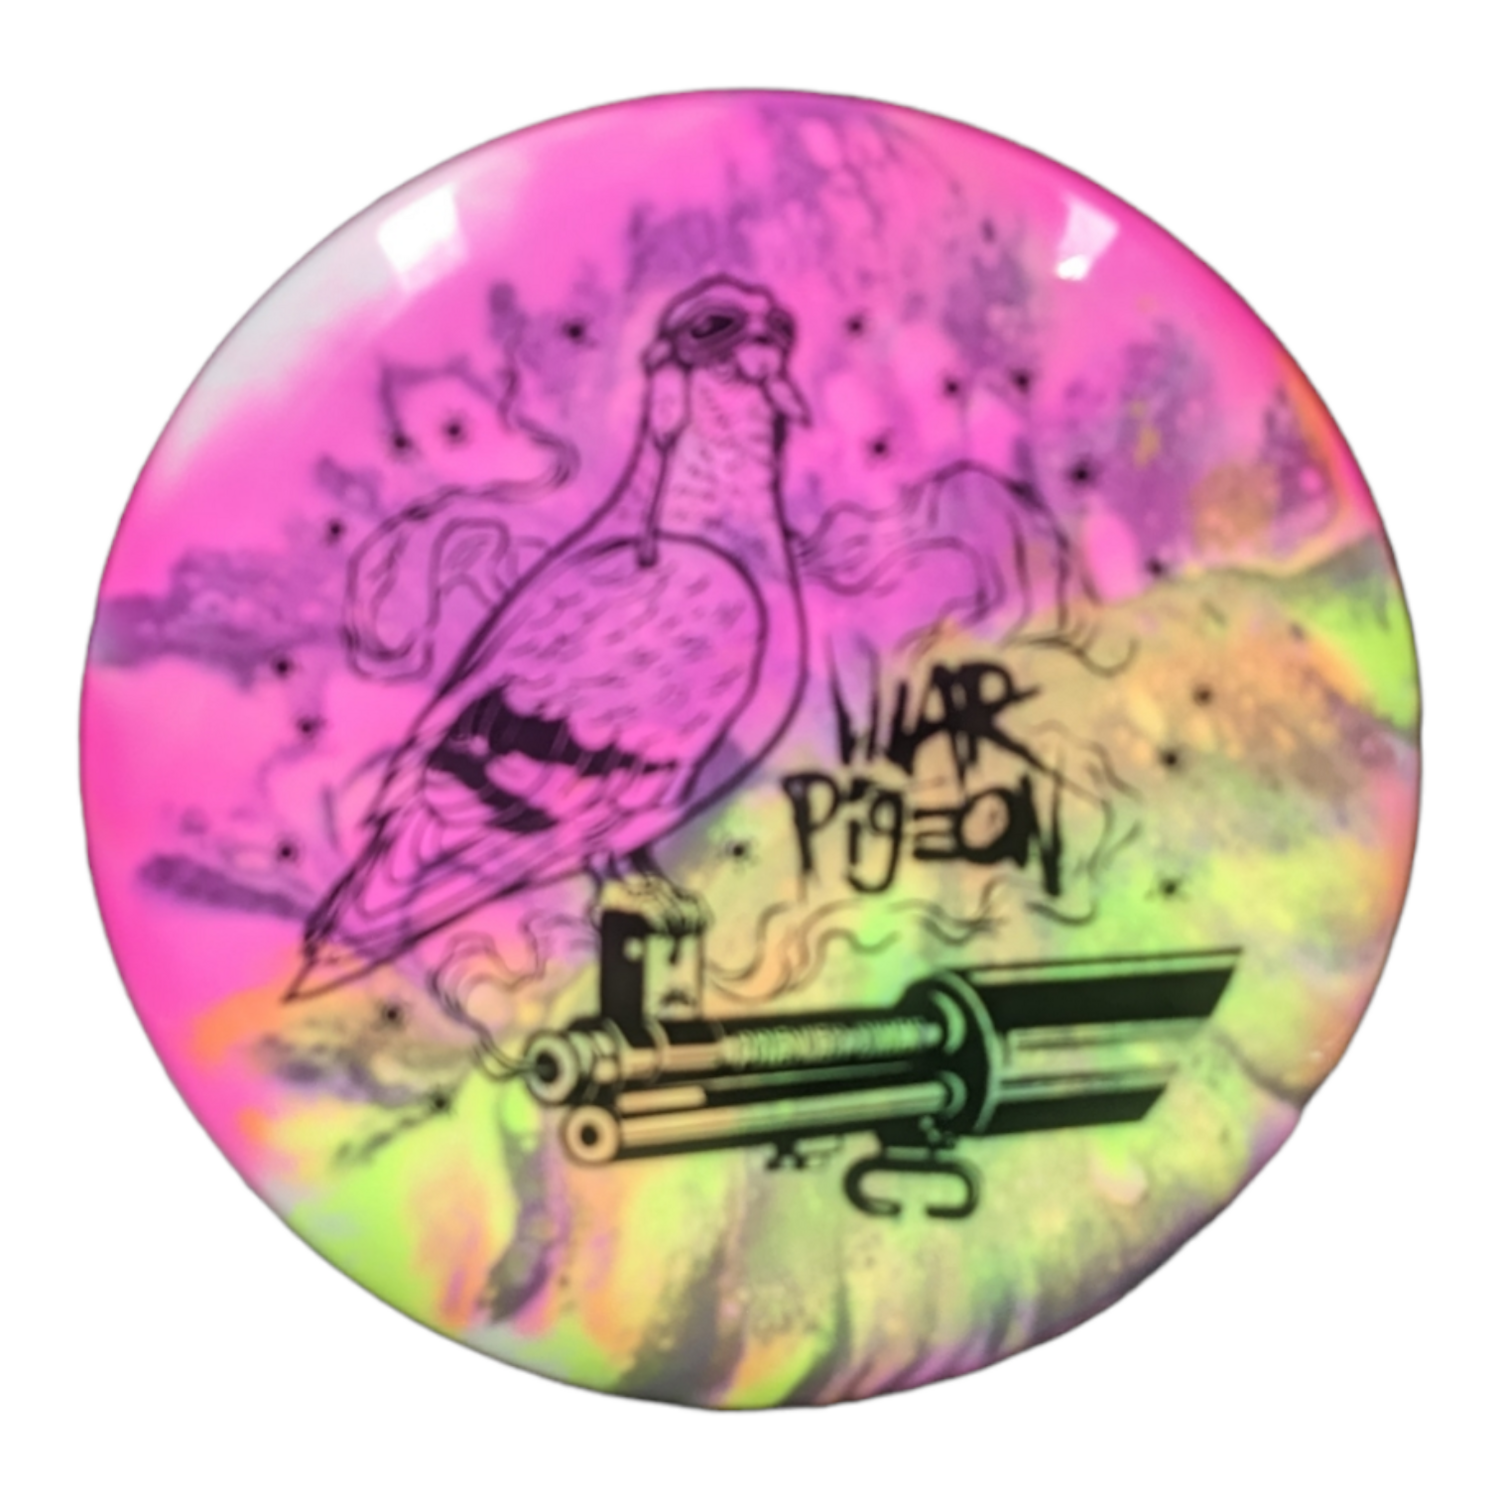 War Pigeon - Dyed - 175g